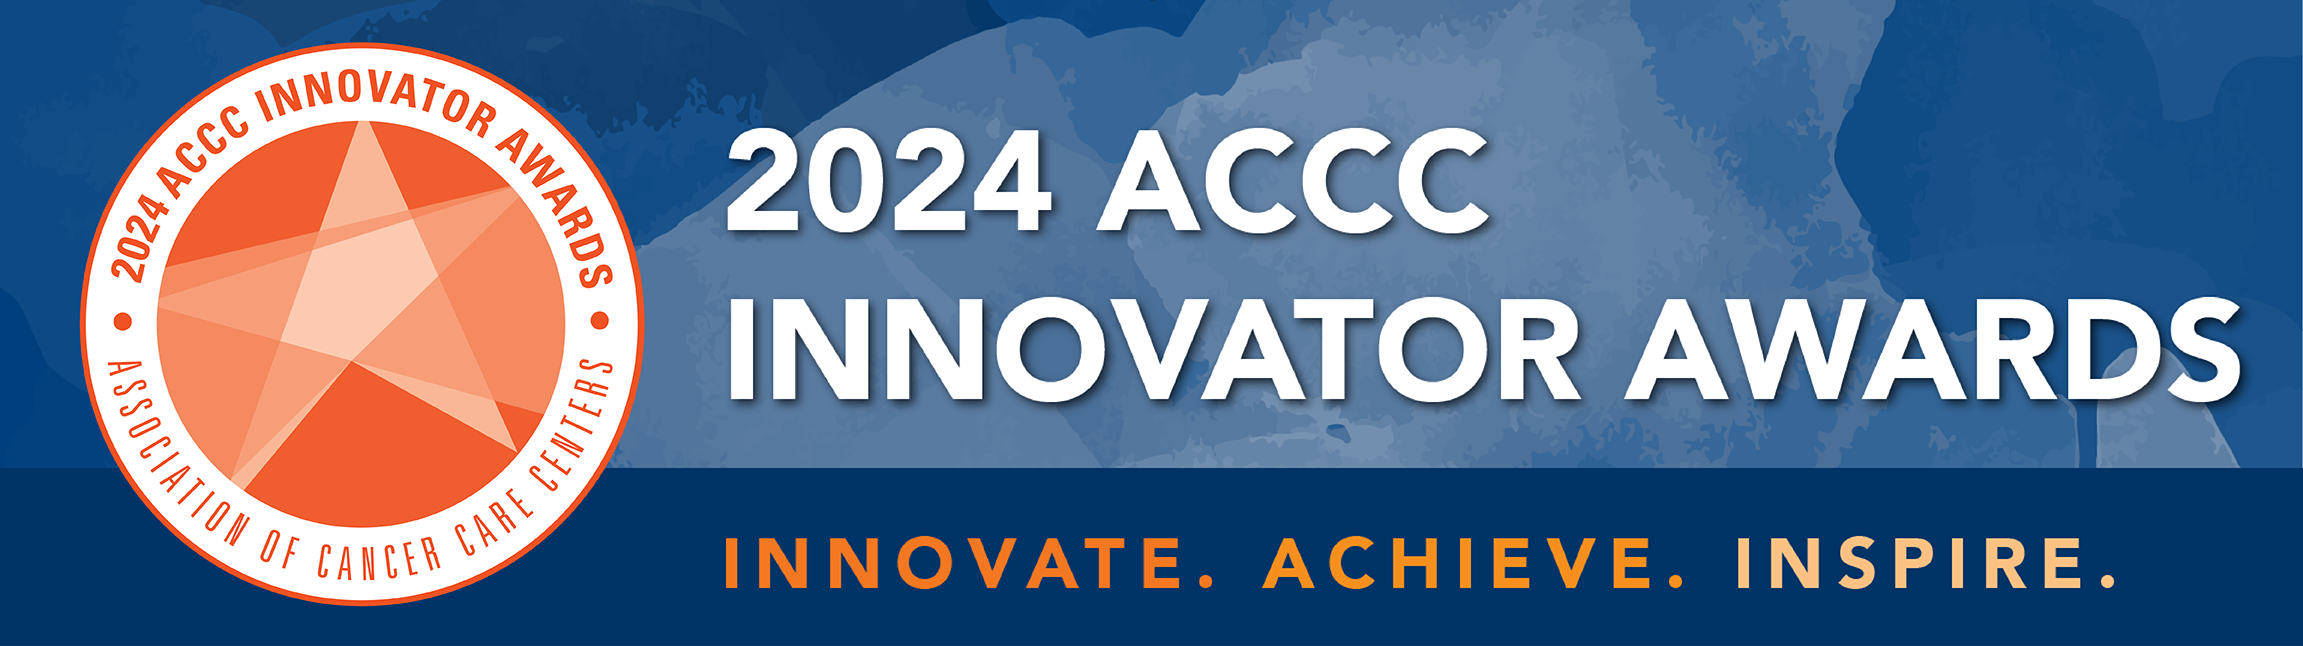 ACCC-2024-Innovator-Awards-2303x646